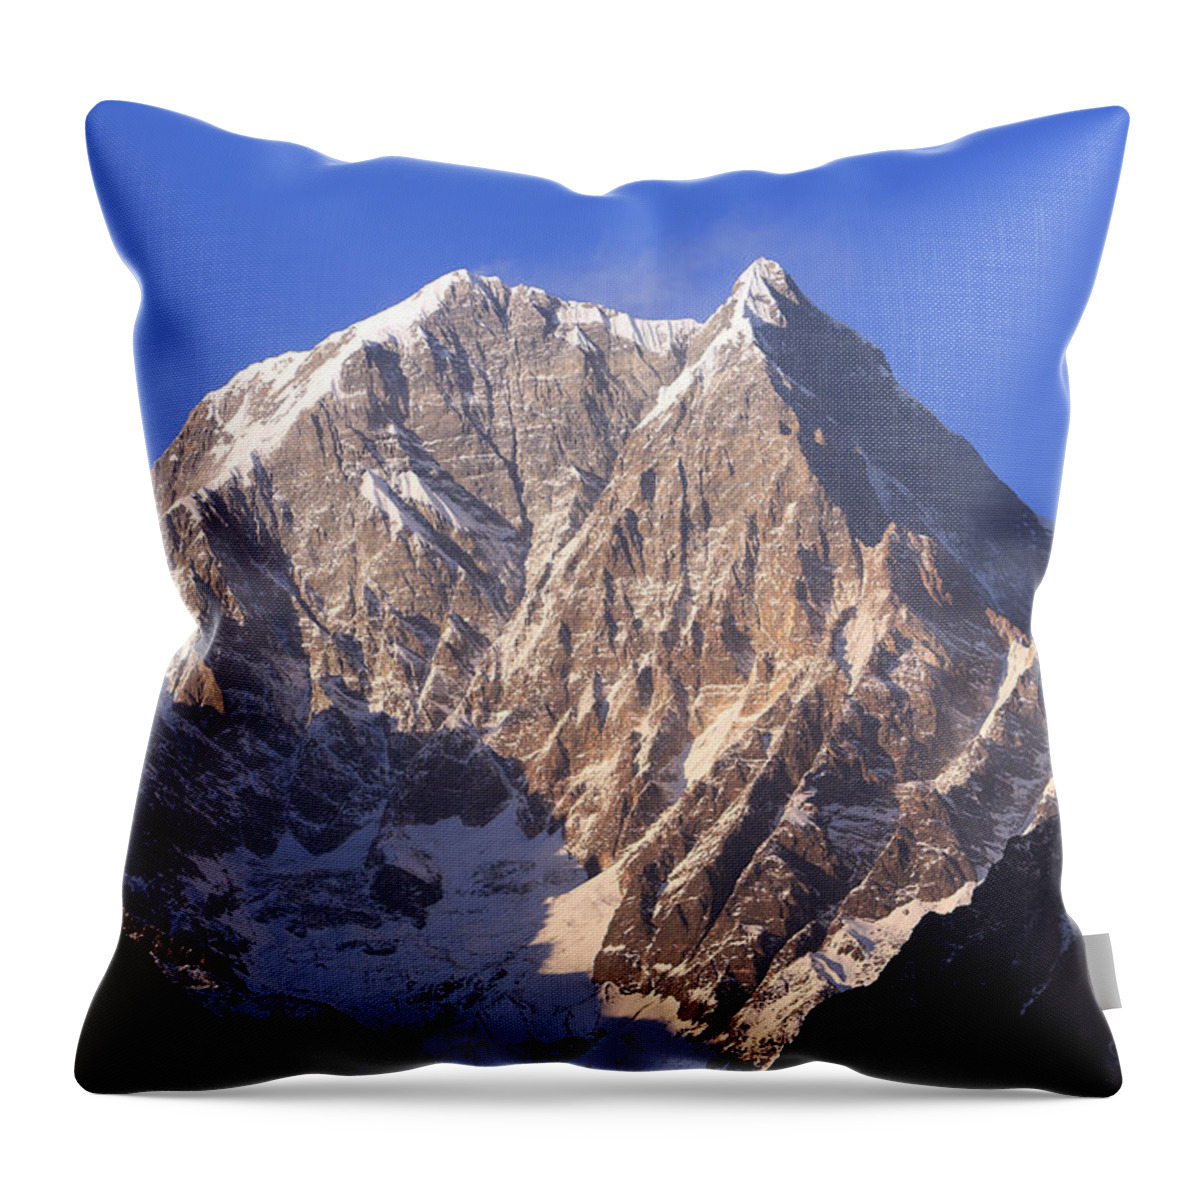 Nepal Throw Pillow featuring the photograph Nilgiri South 6839m by Aidan Moran